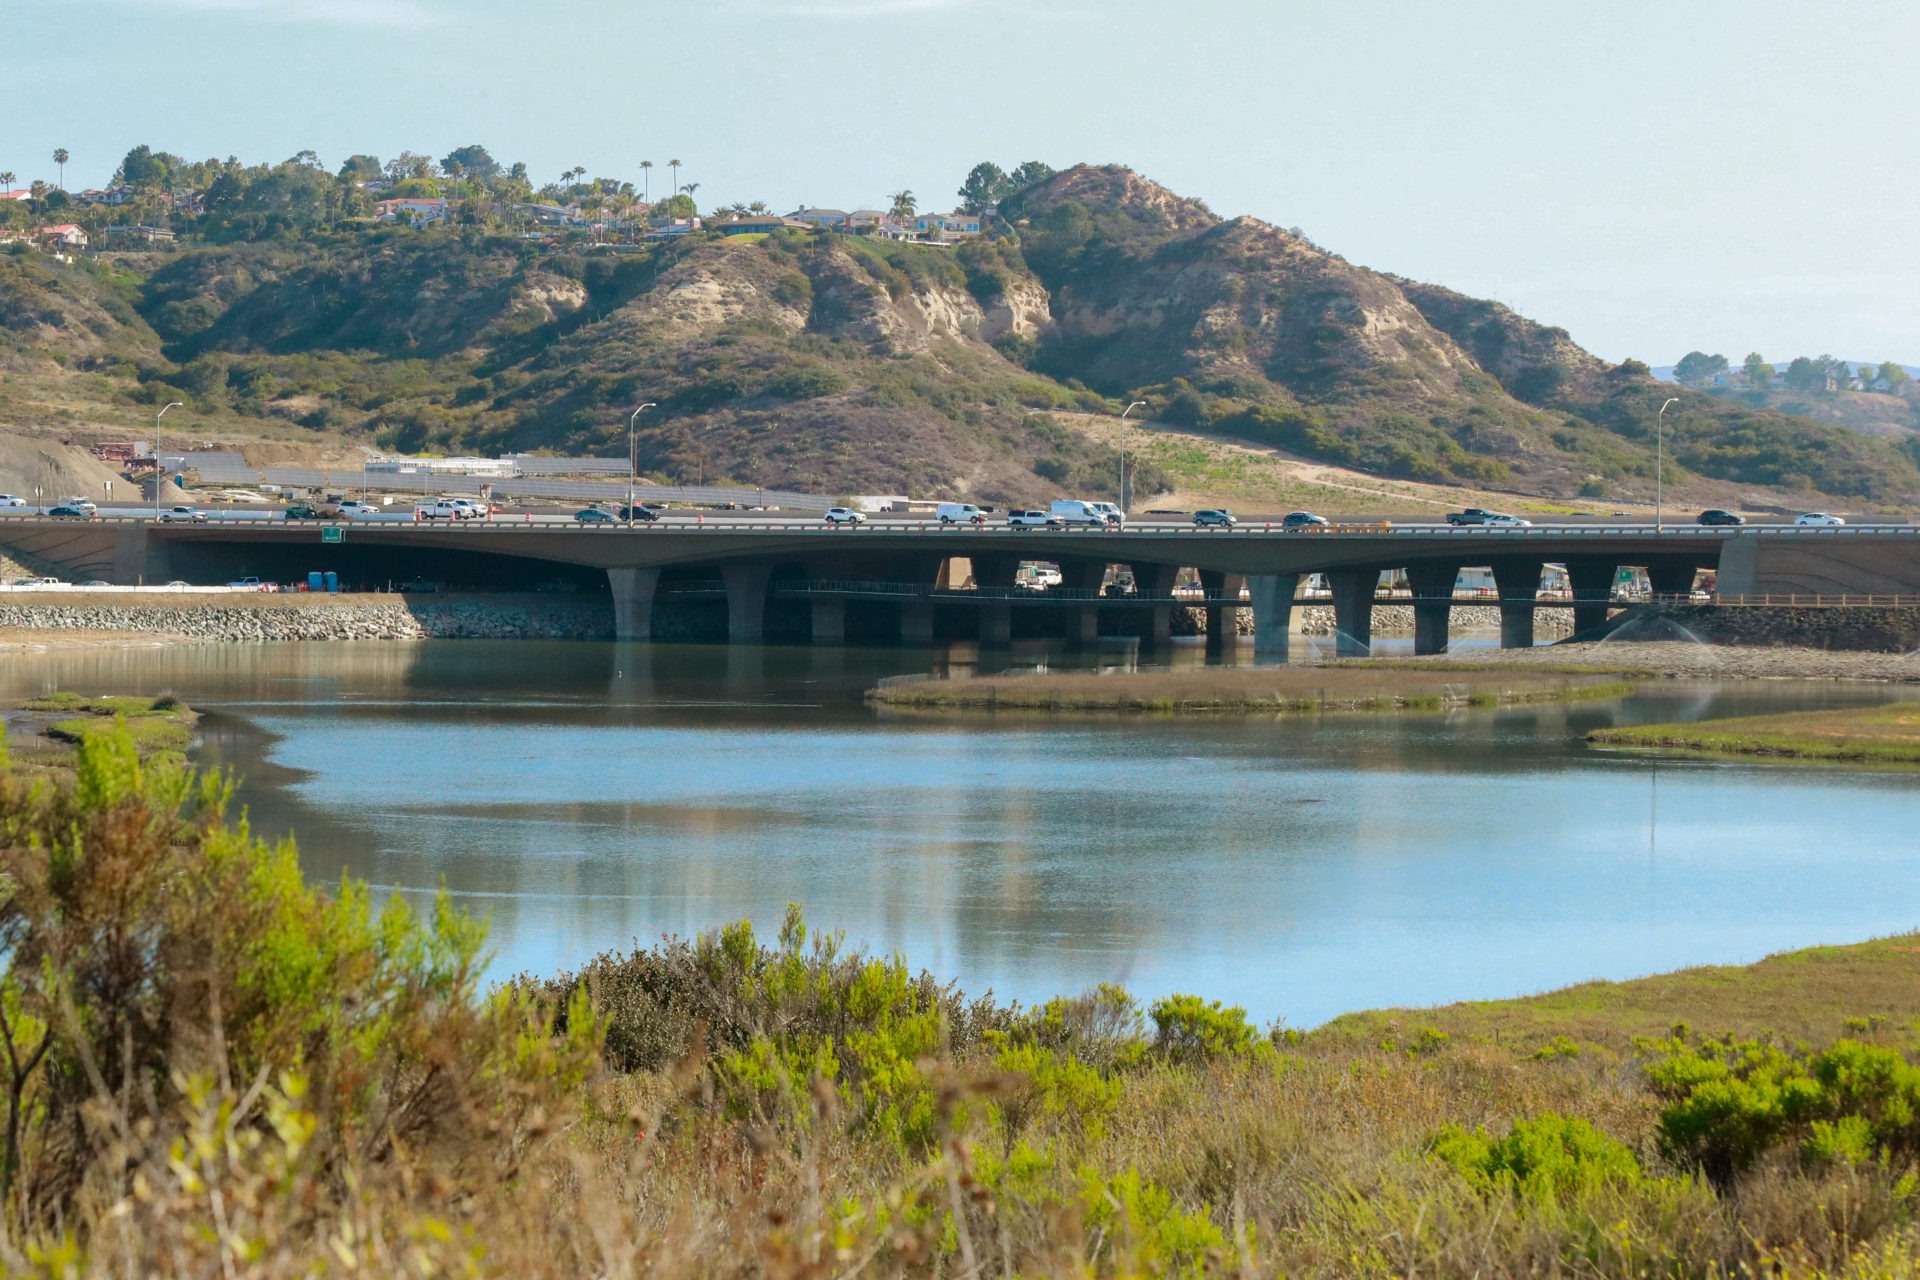 Suspense bridge over San Elijo Lagoon allows people to connect to trails